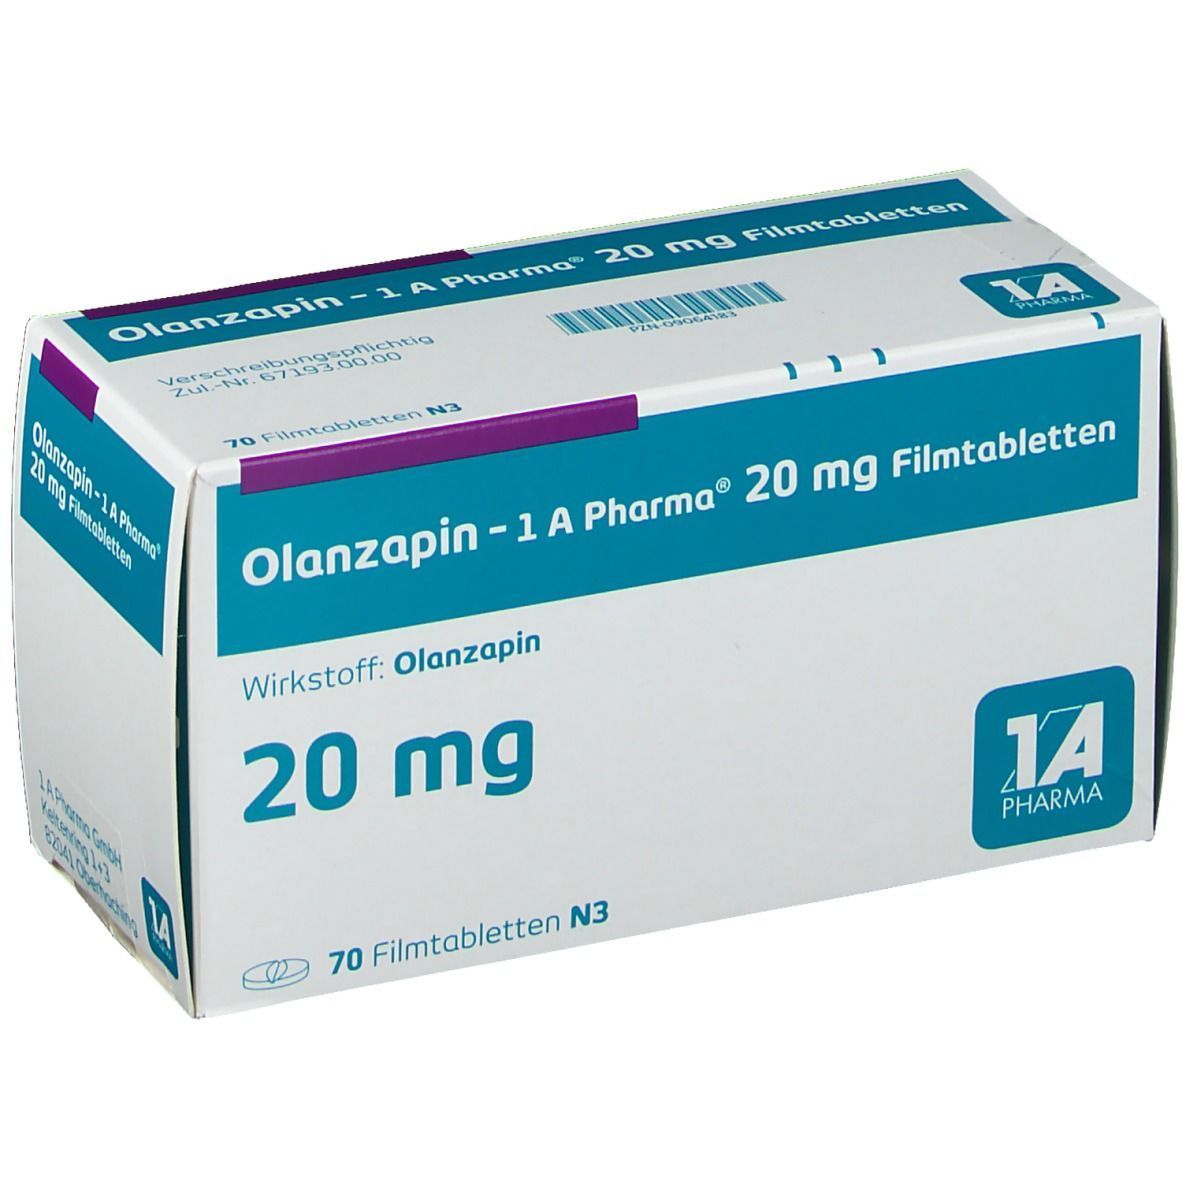 Olanzapin - 1 A Pharma® 20 mg